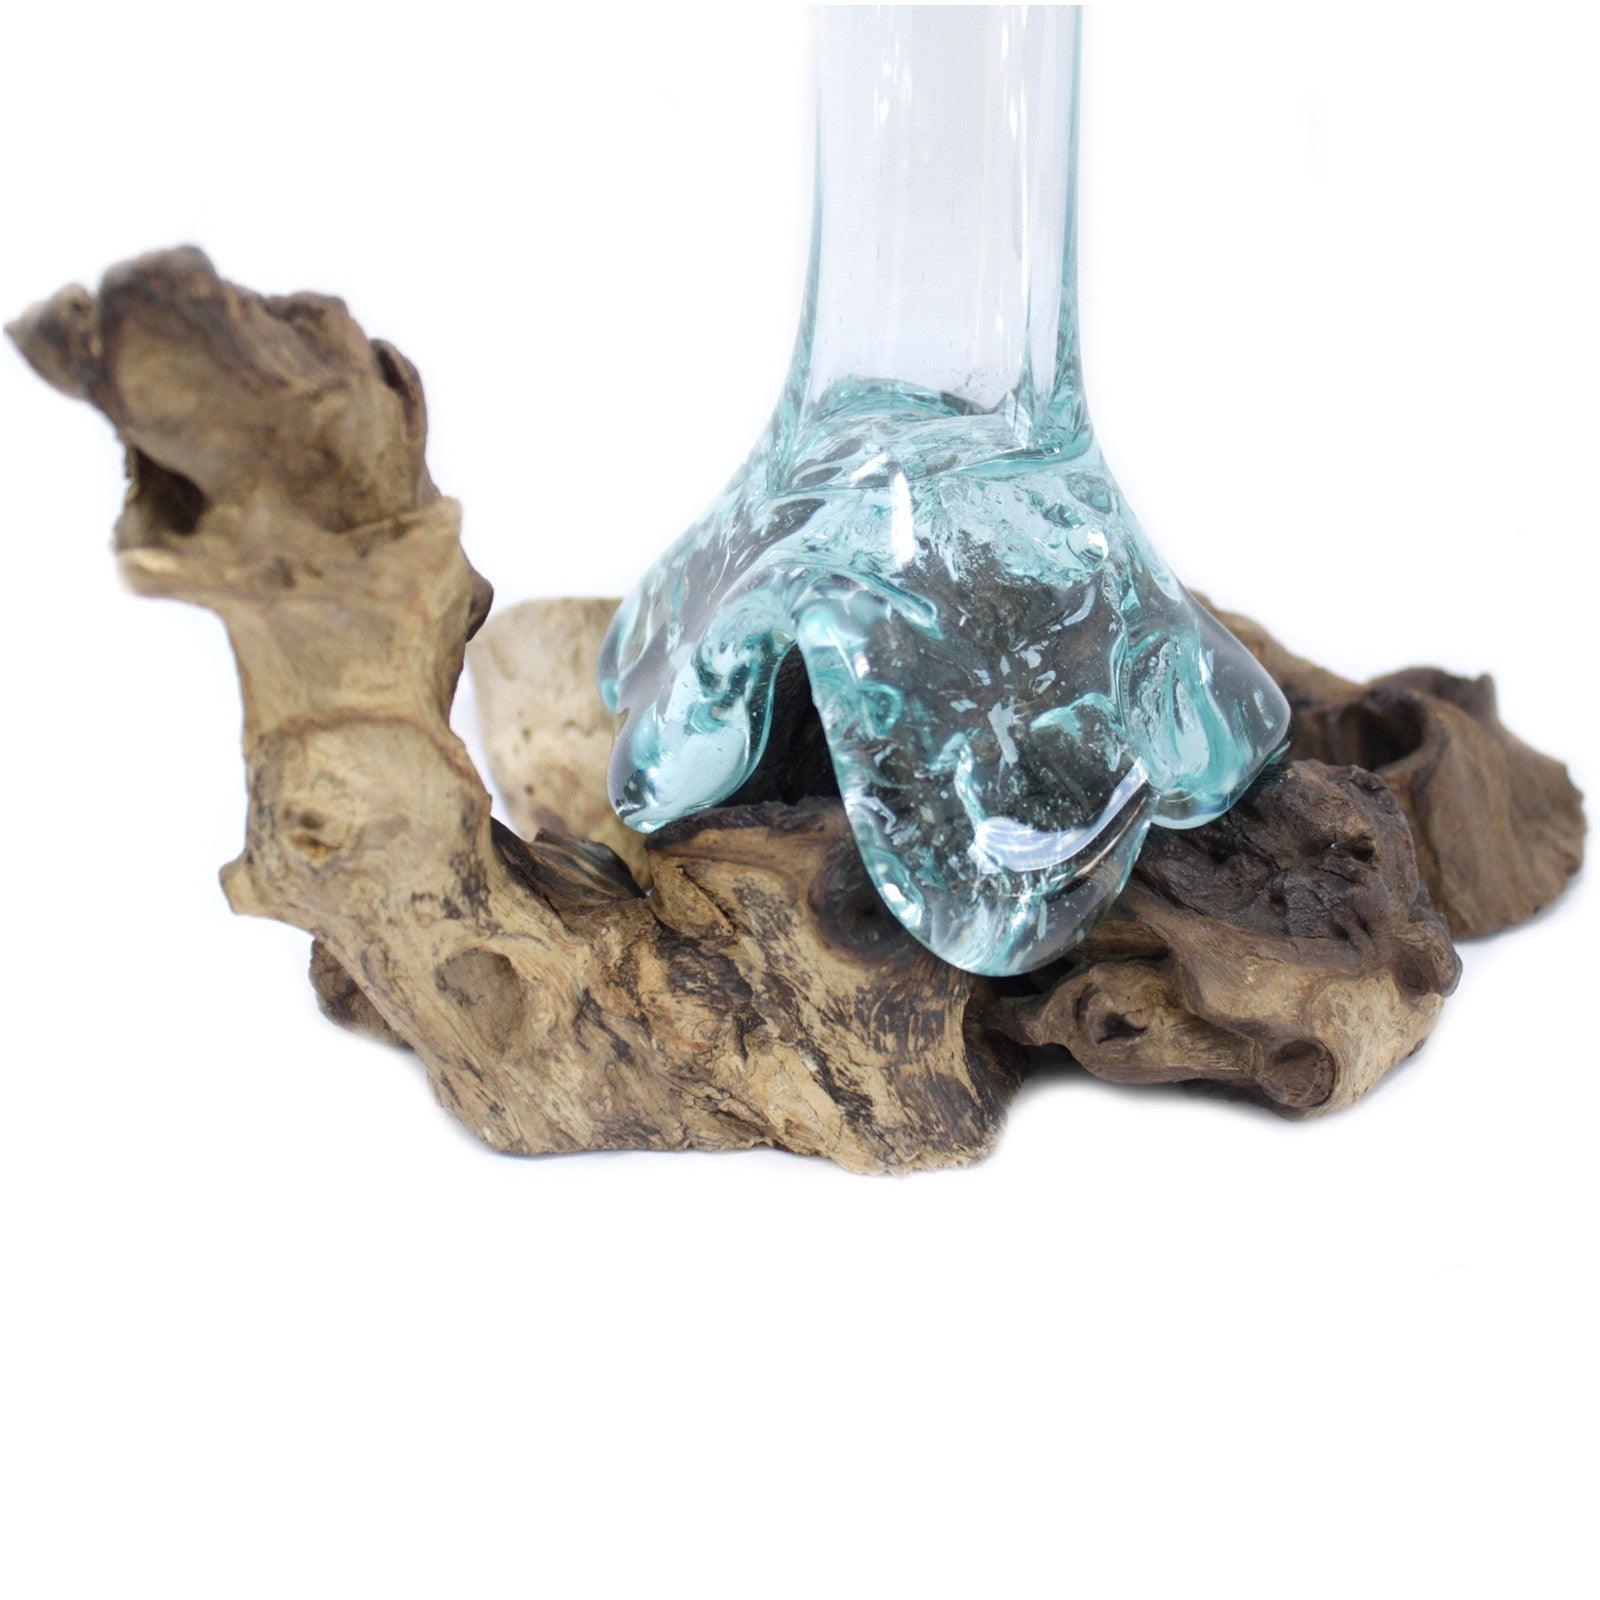 Molten Glass on Wood - Vase - DuvetDay.co.uk